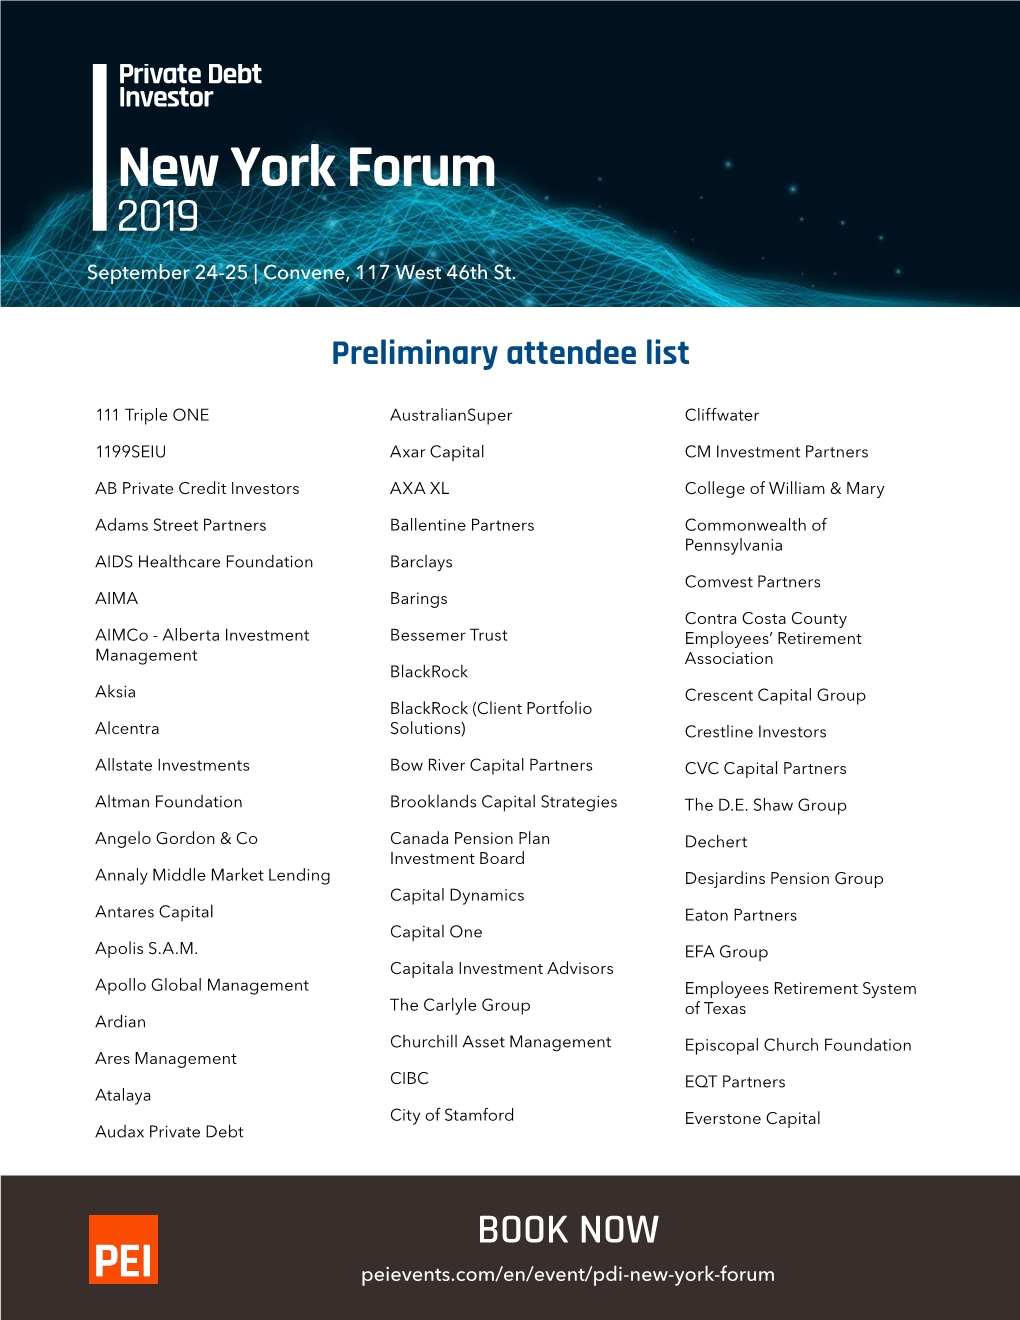 PDI New York Forum 2019 Preliminary Attendee List